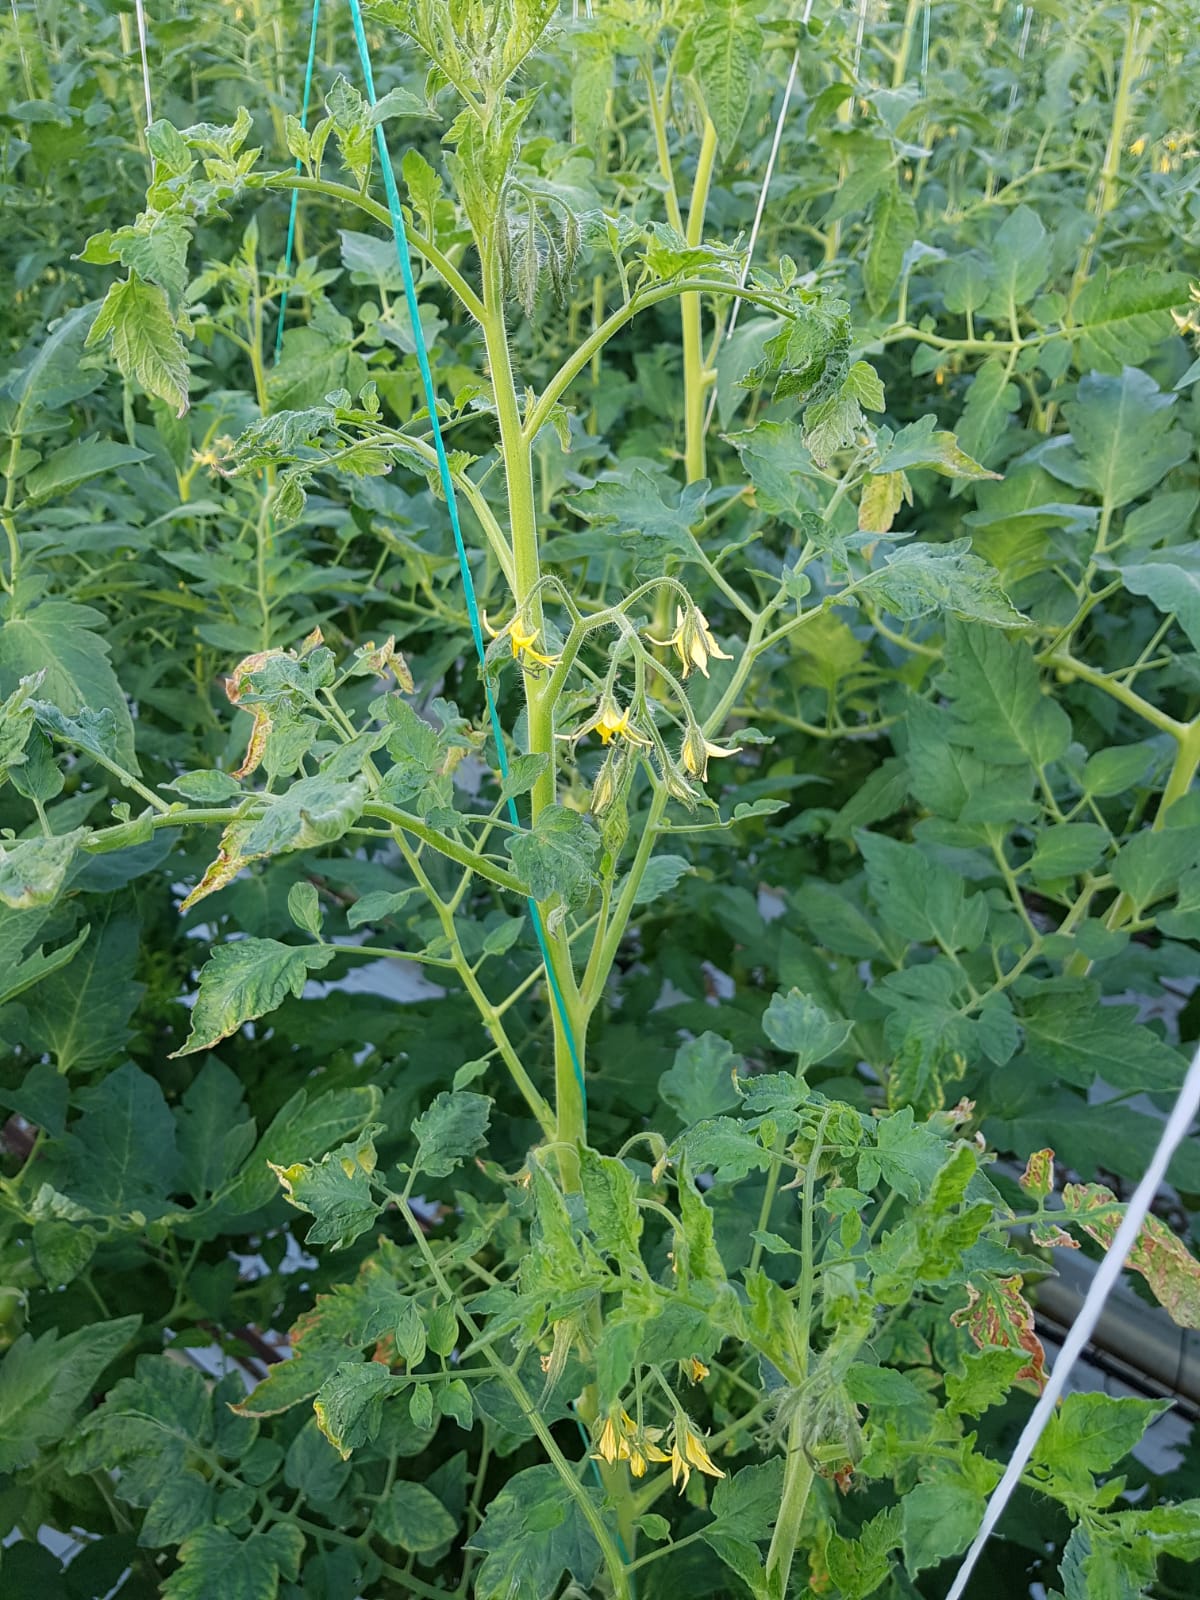 ToBRFV symptoms on tomato plant - chlorosis, mottling, necrosis, drooping